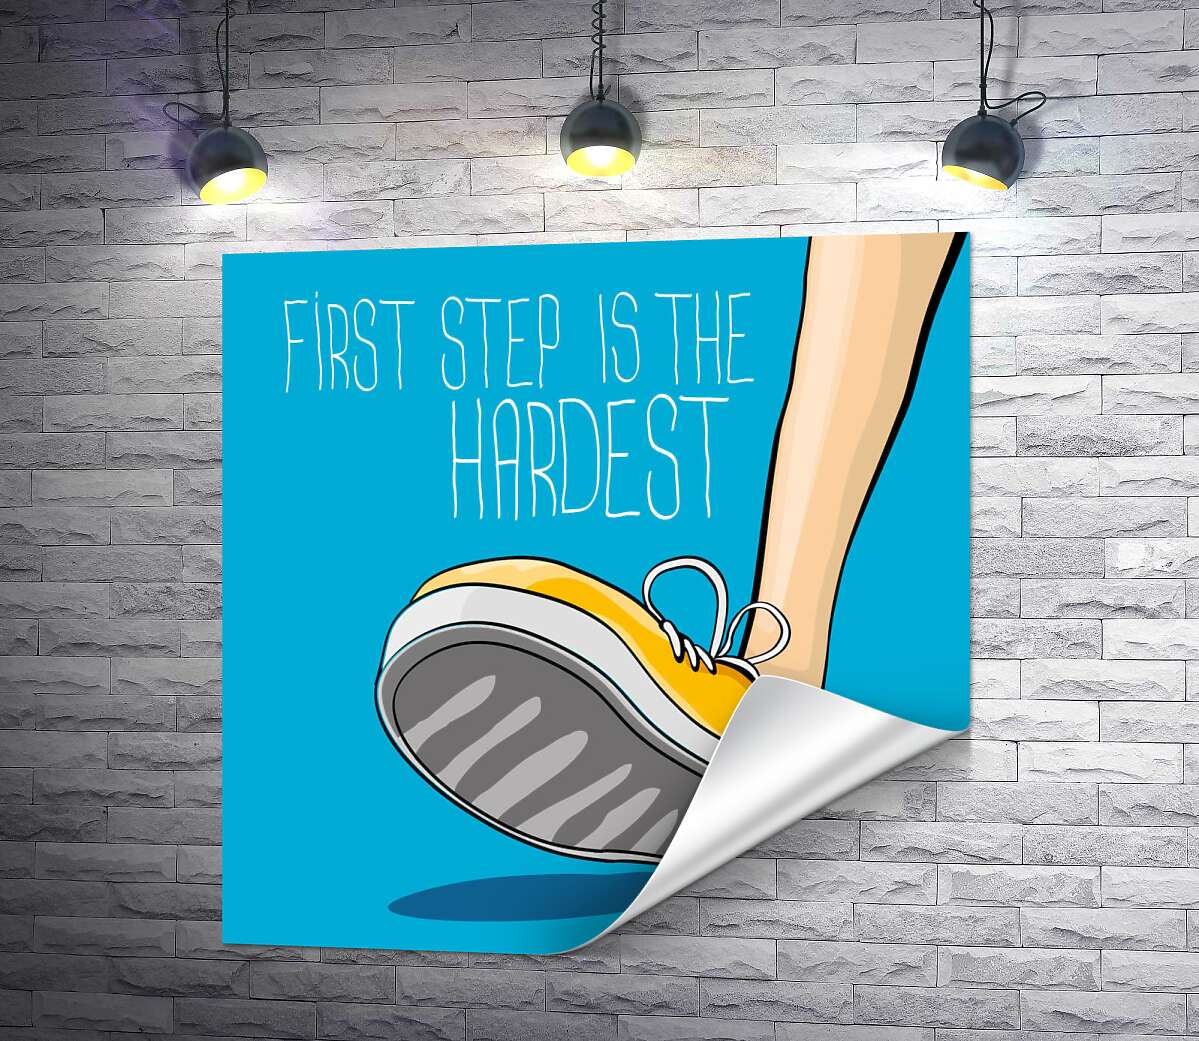 друк Жовтий кросівок ступає на землю поряд з фразою "first step is the hardest"